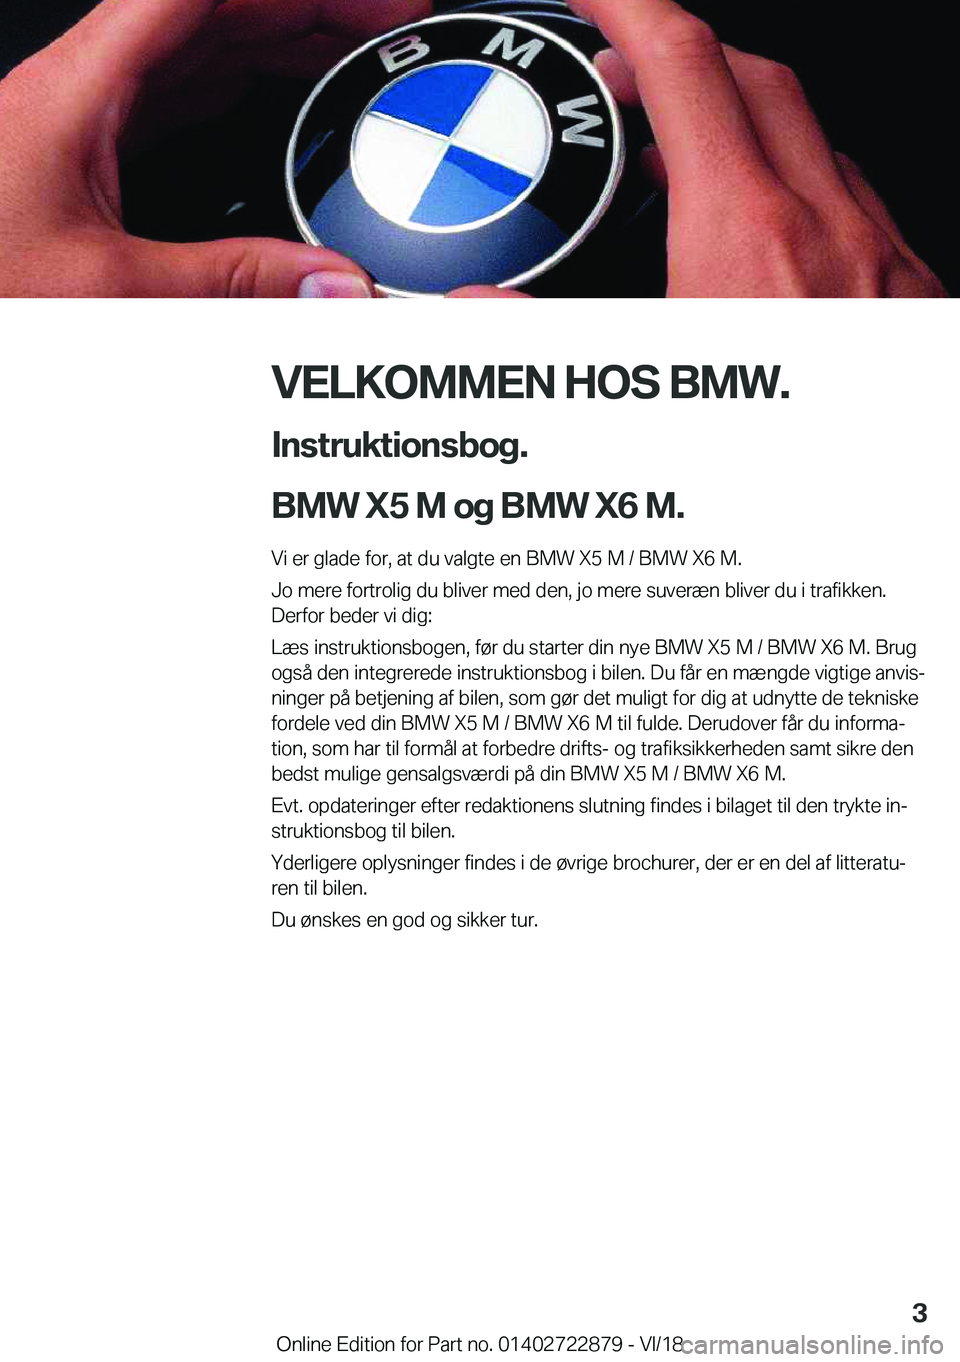 BMW X6 M 2019  Betriebsanleitungen (in German) �V�E�L�K�O�M�M�E�N��H�O�S��B�M�W�.
�I�n�s�t�r�u�k�t�i�o�n�s�b�o�g�.
�B�M�W��X�5��M��o�g��B�M�W��X�6��M�.
�V�i��e�r��g�l�a�d�e��f�o�r�,��a�t��d�u��v�a�l�g�t�e��e�n��B�M�W��X�5��M��/�